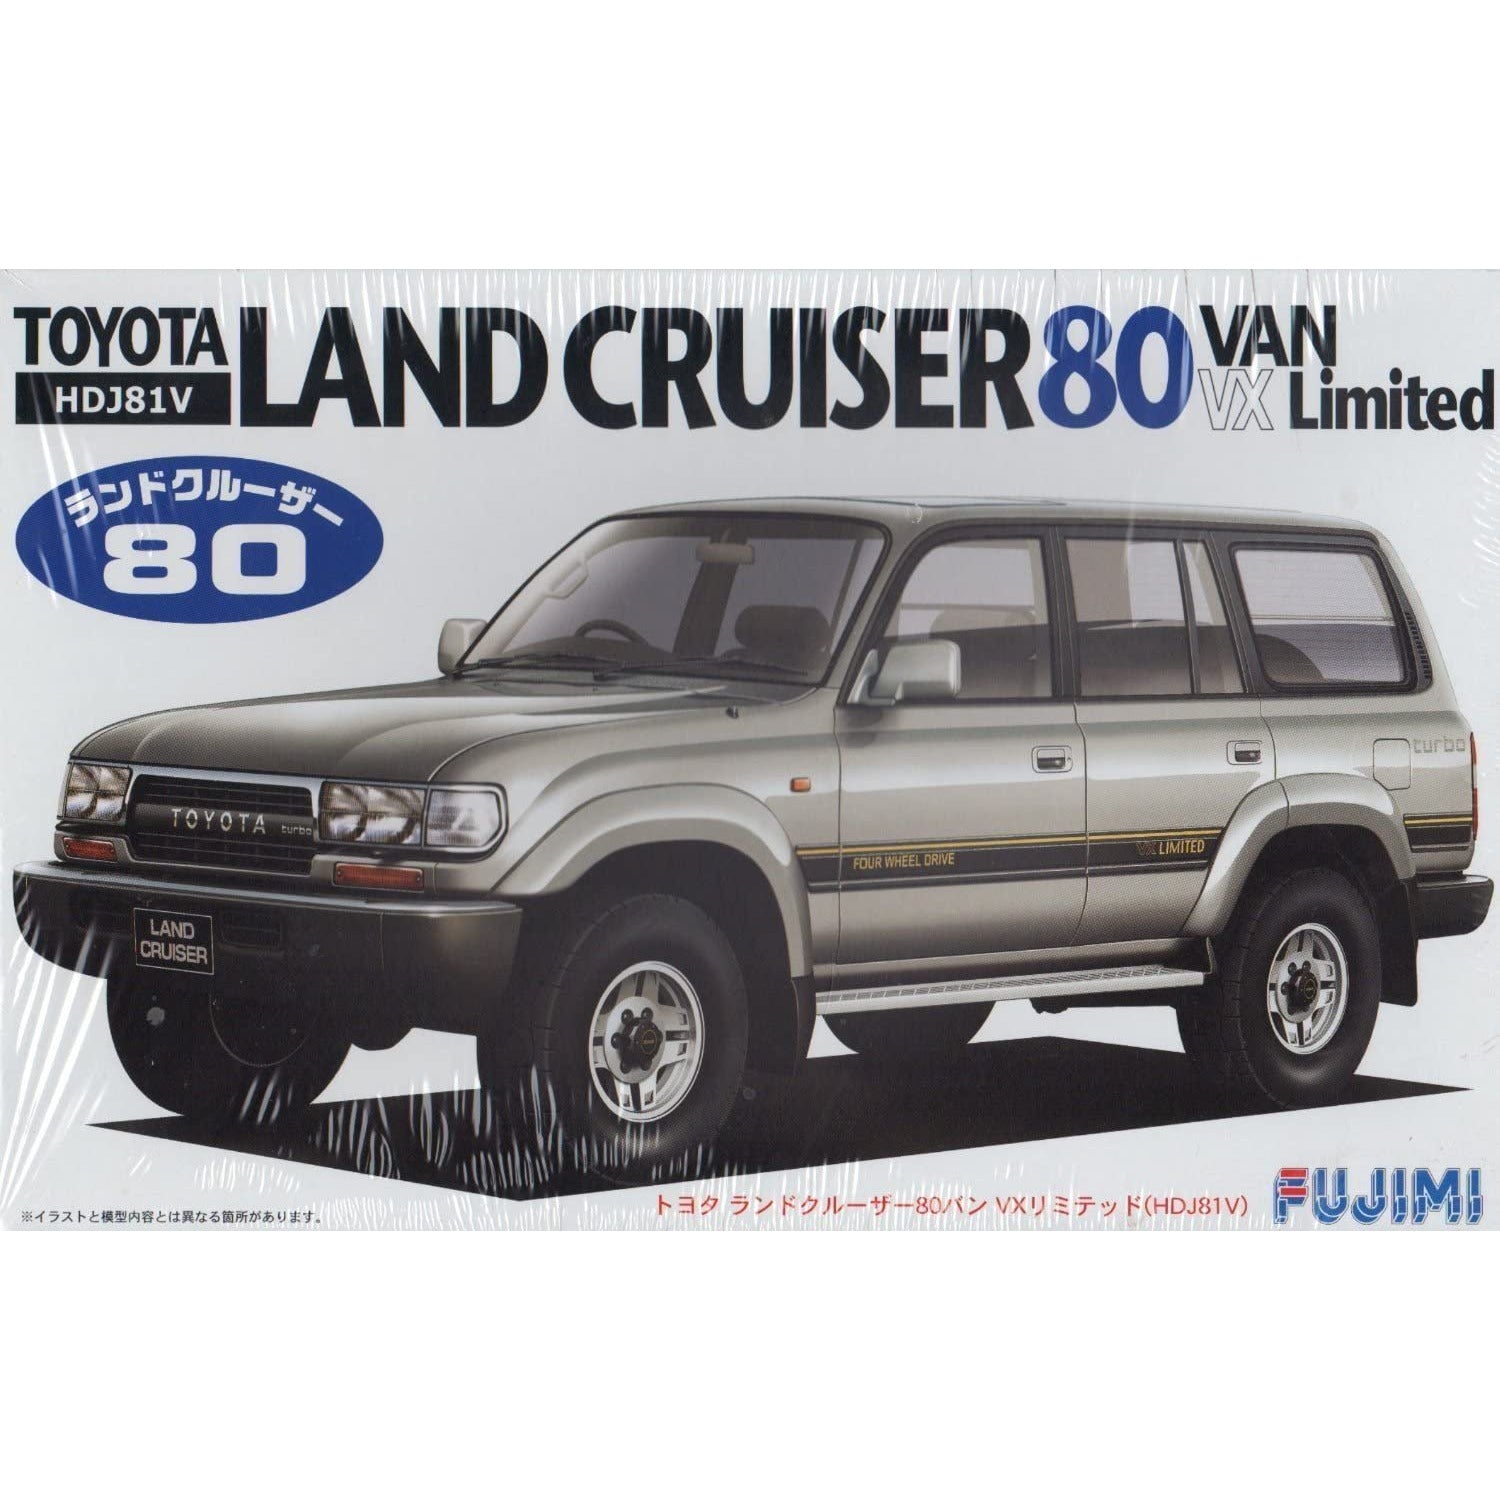 Toyota Landcruiser 1/24 by Fujimi